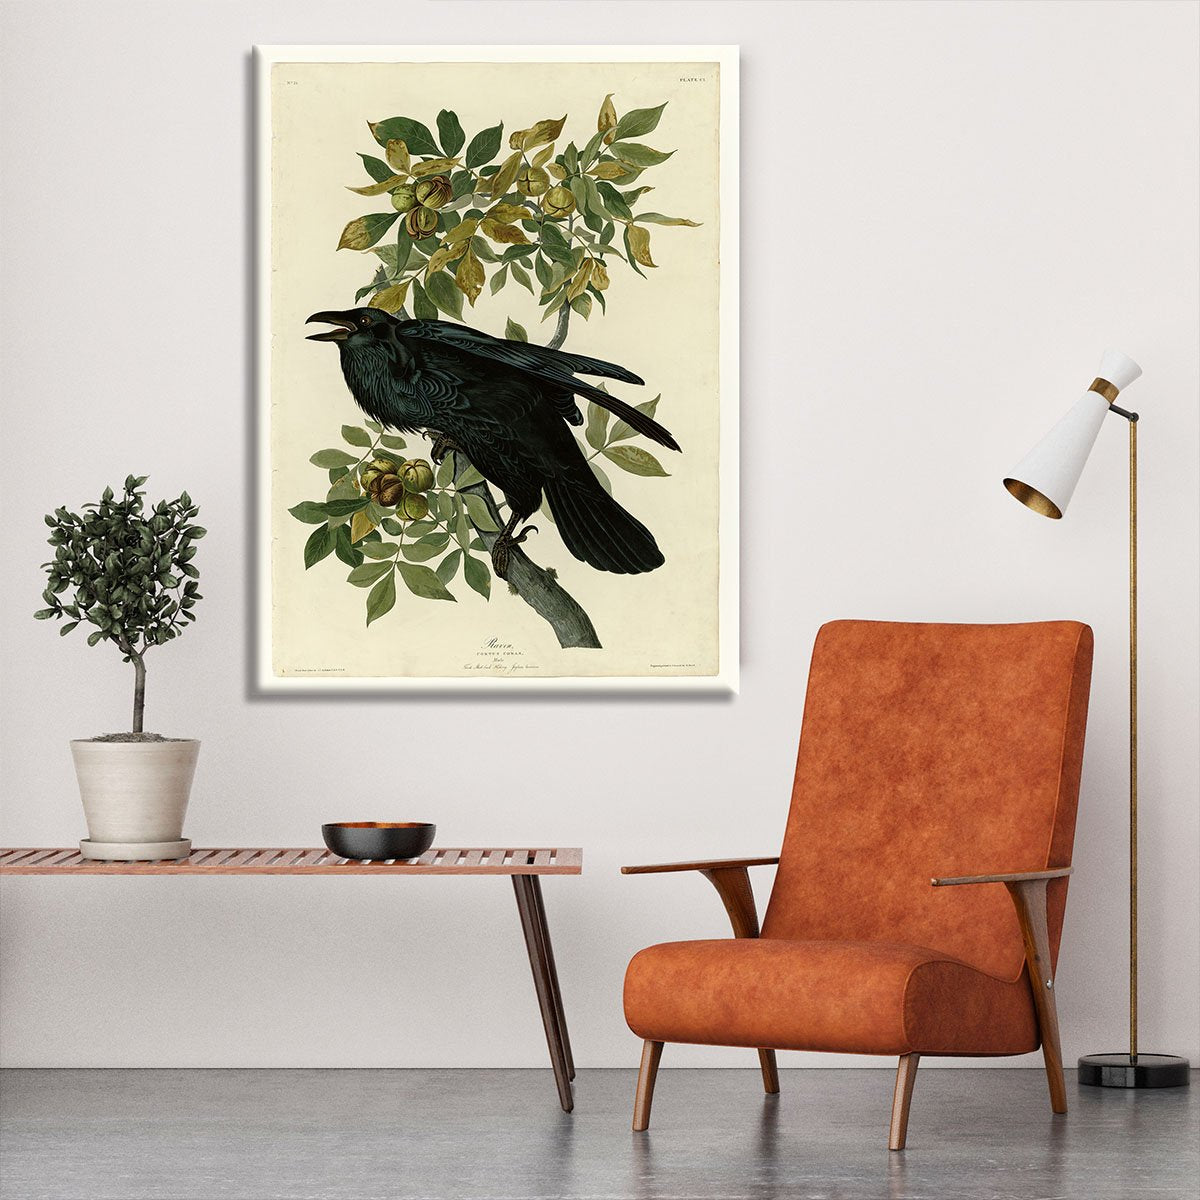 Raven by Audubon Canvas Print or Poster